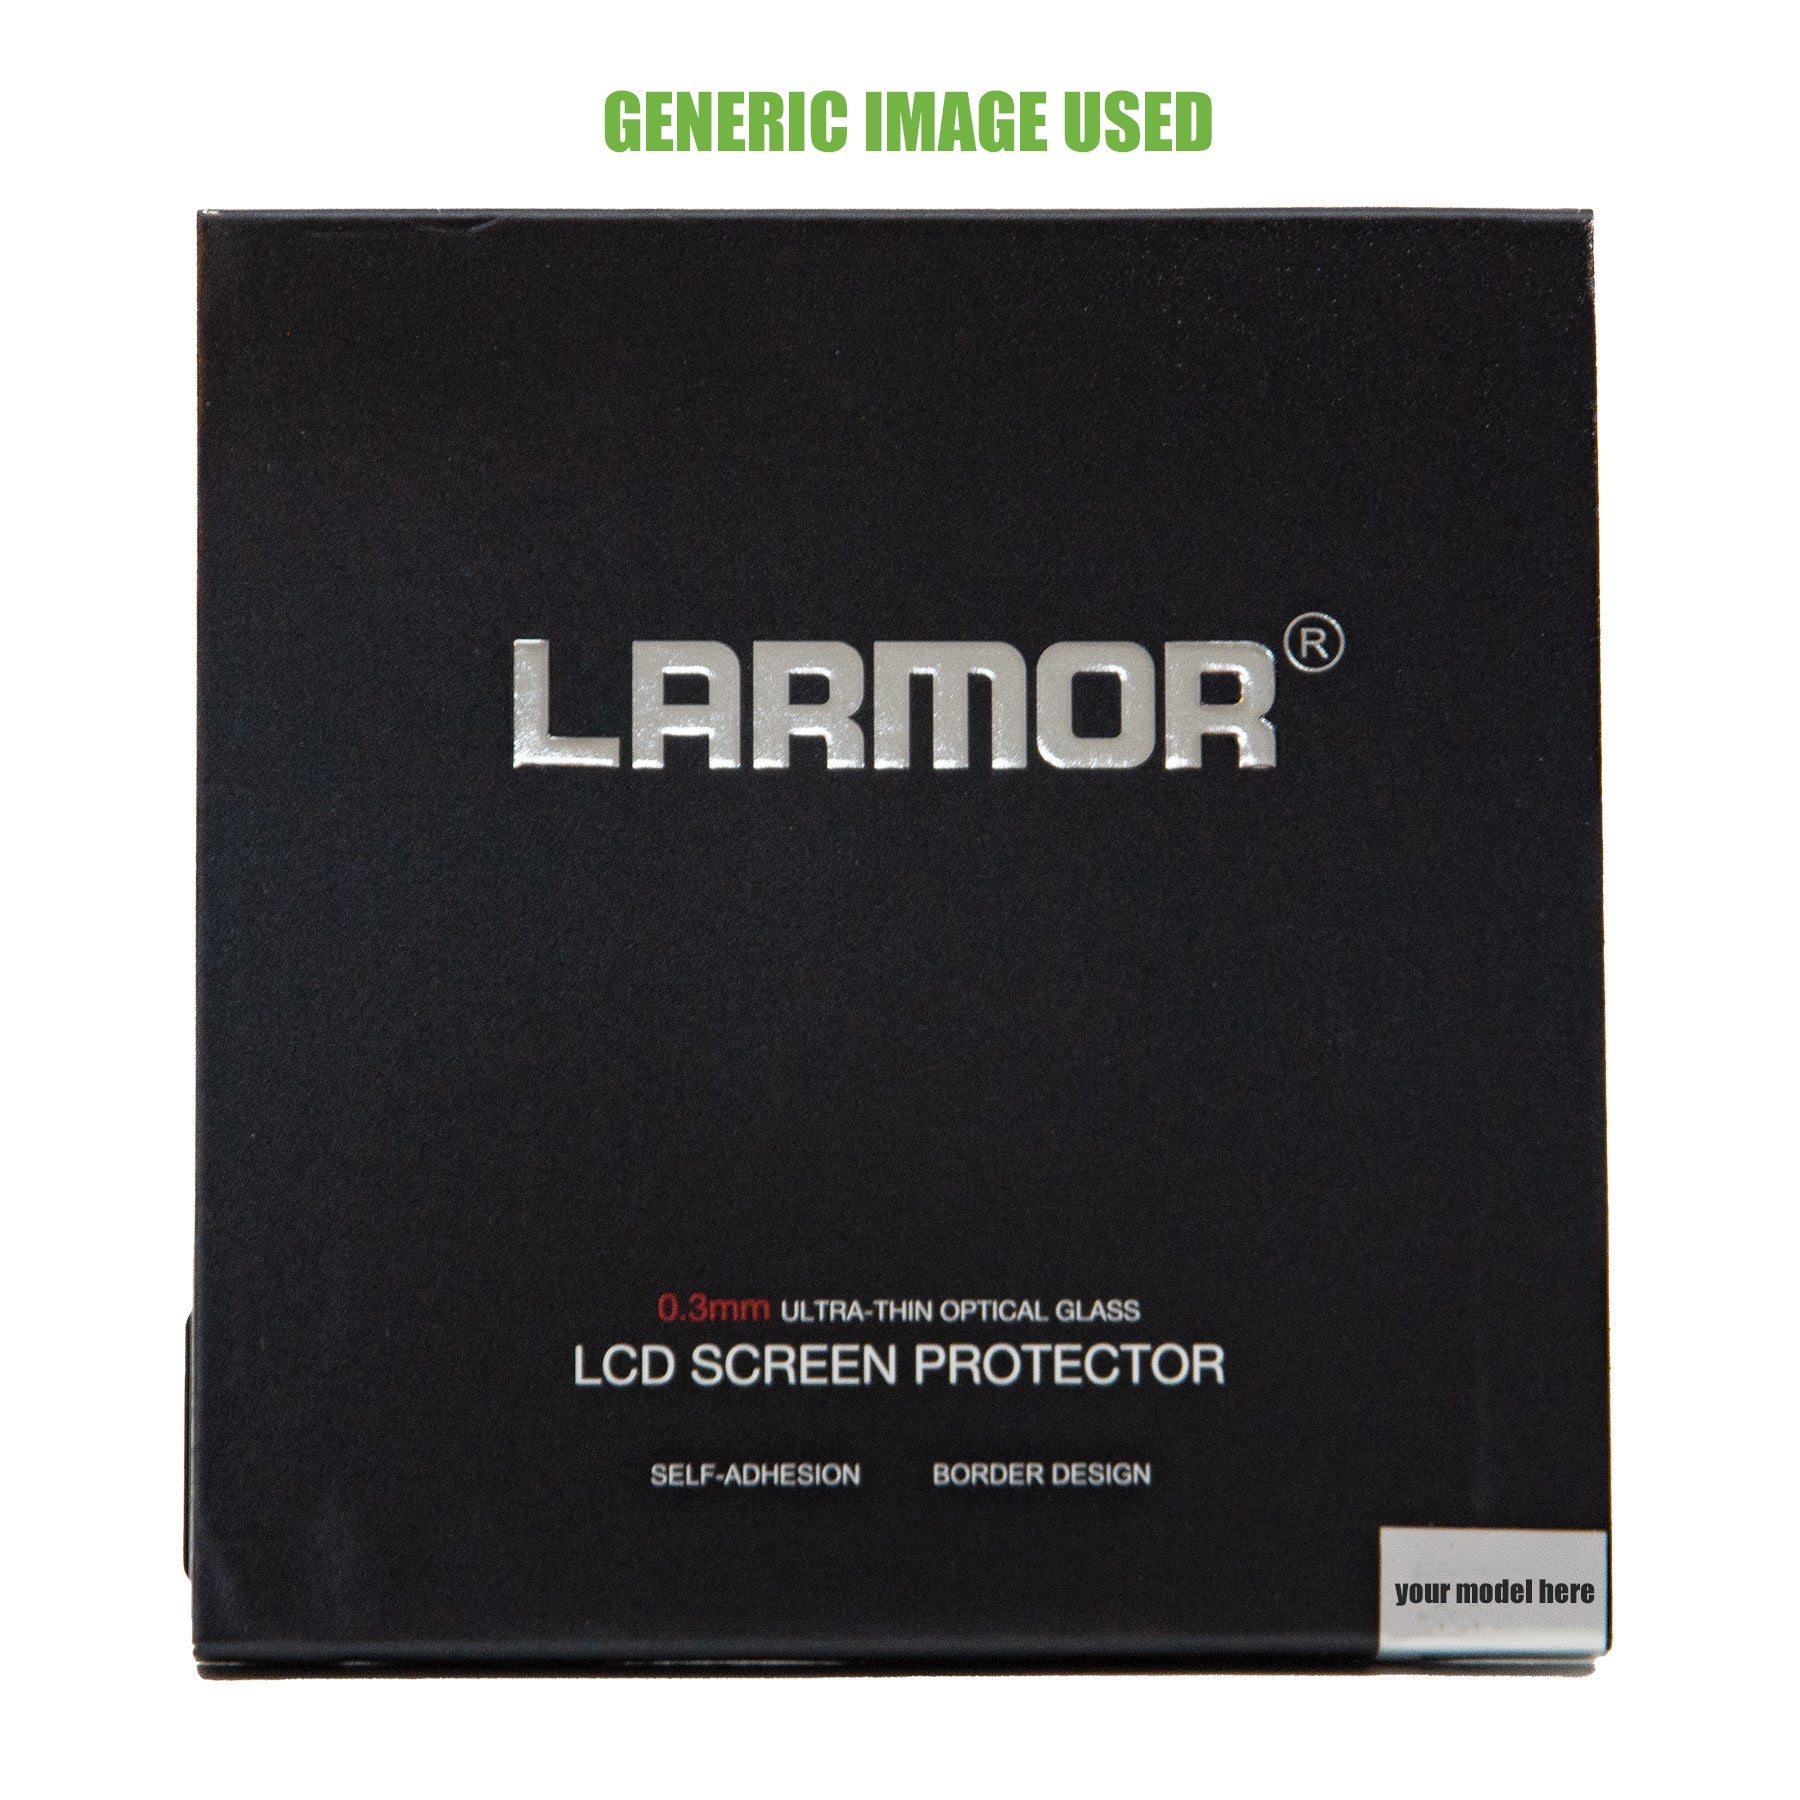 GGS Foto Larmor GEN4 Screen Protector for 3" LCD 4:3 Ratio